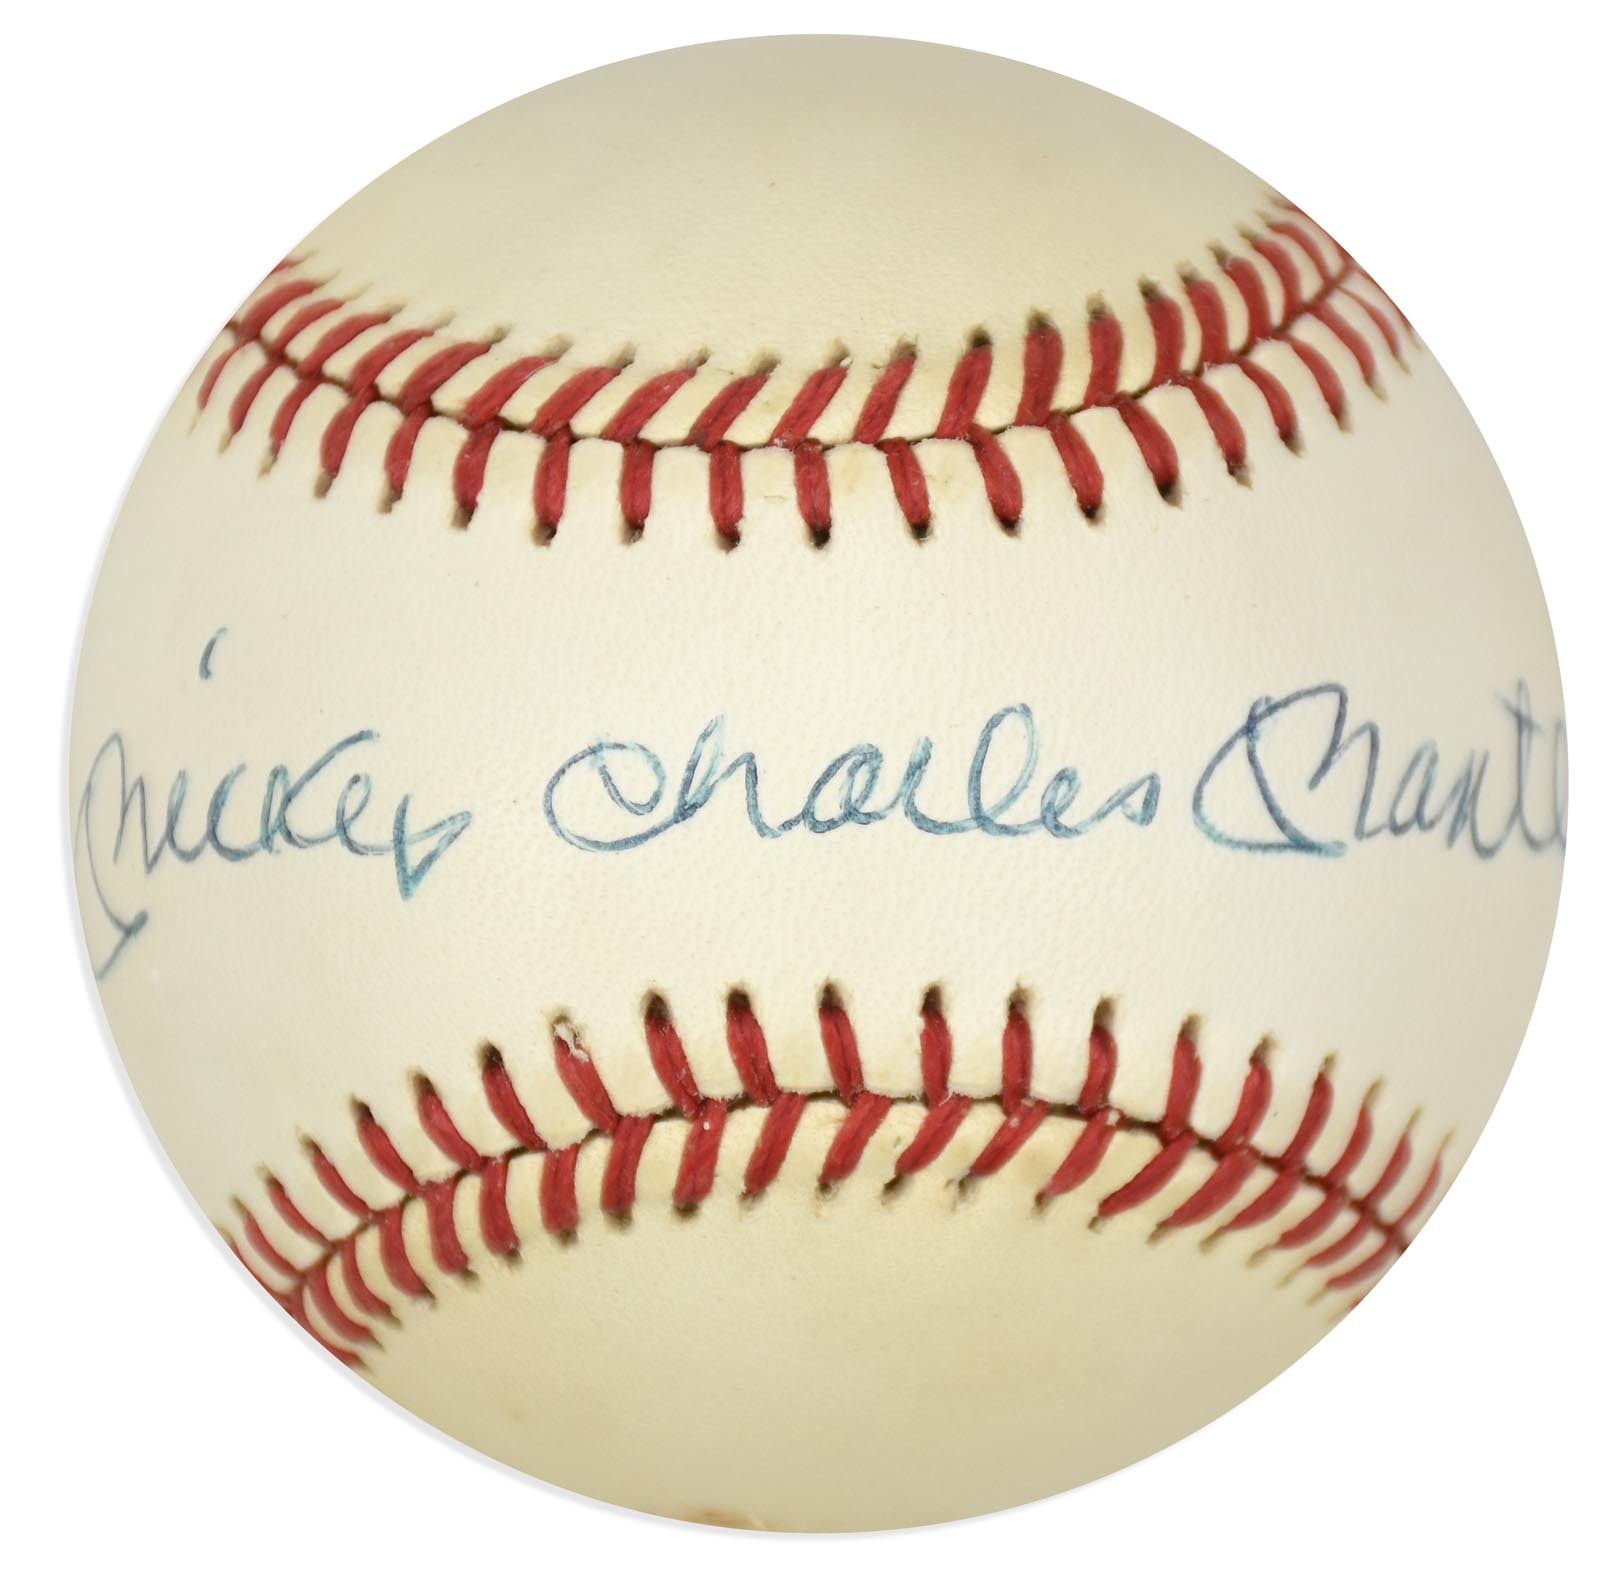 Kubina And The Mick - "Mickey Charles Mantle" Full Name Signed Baseball (PSA)